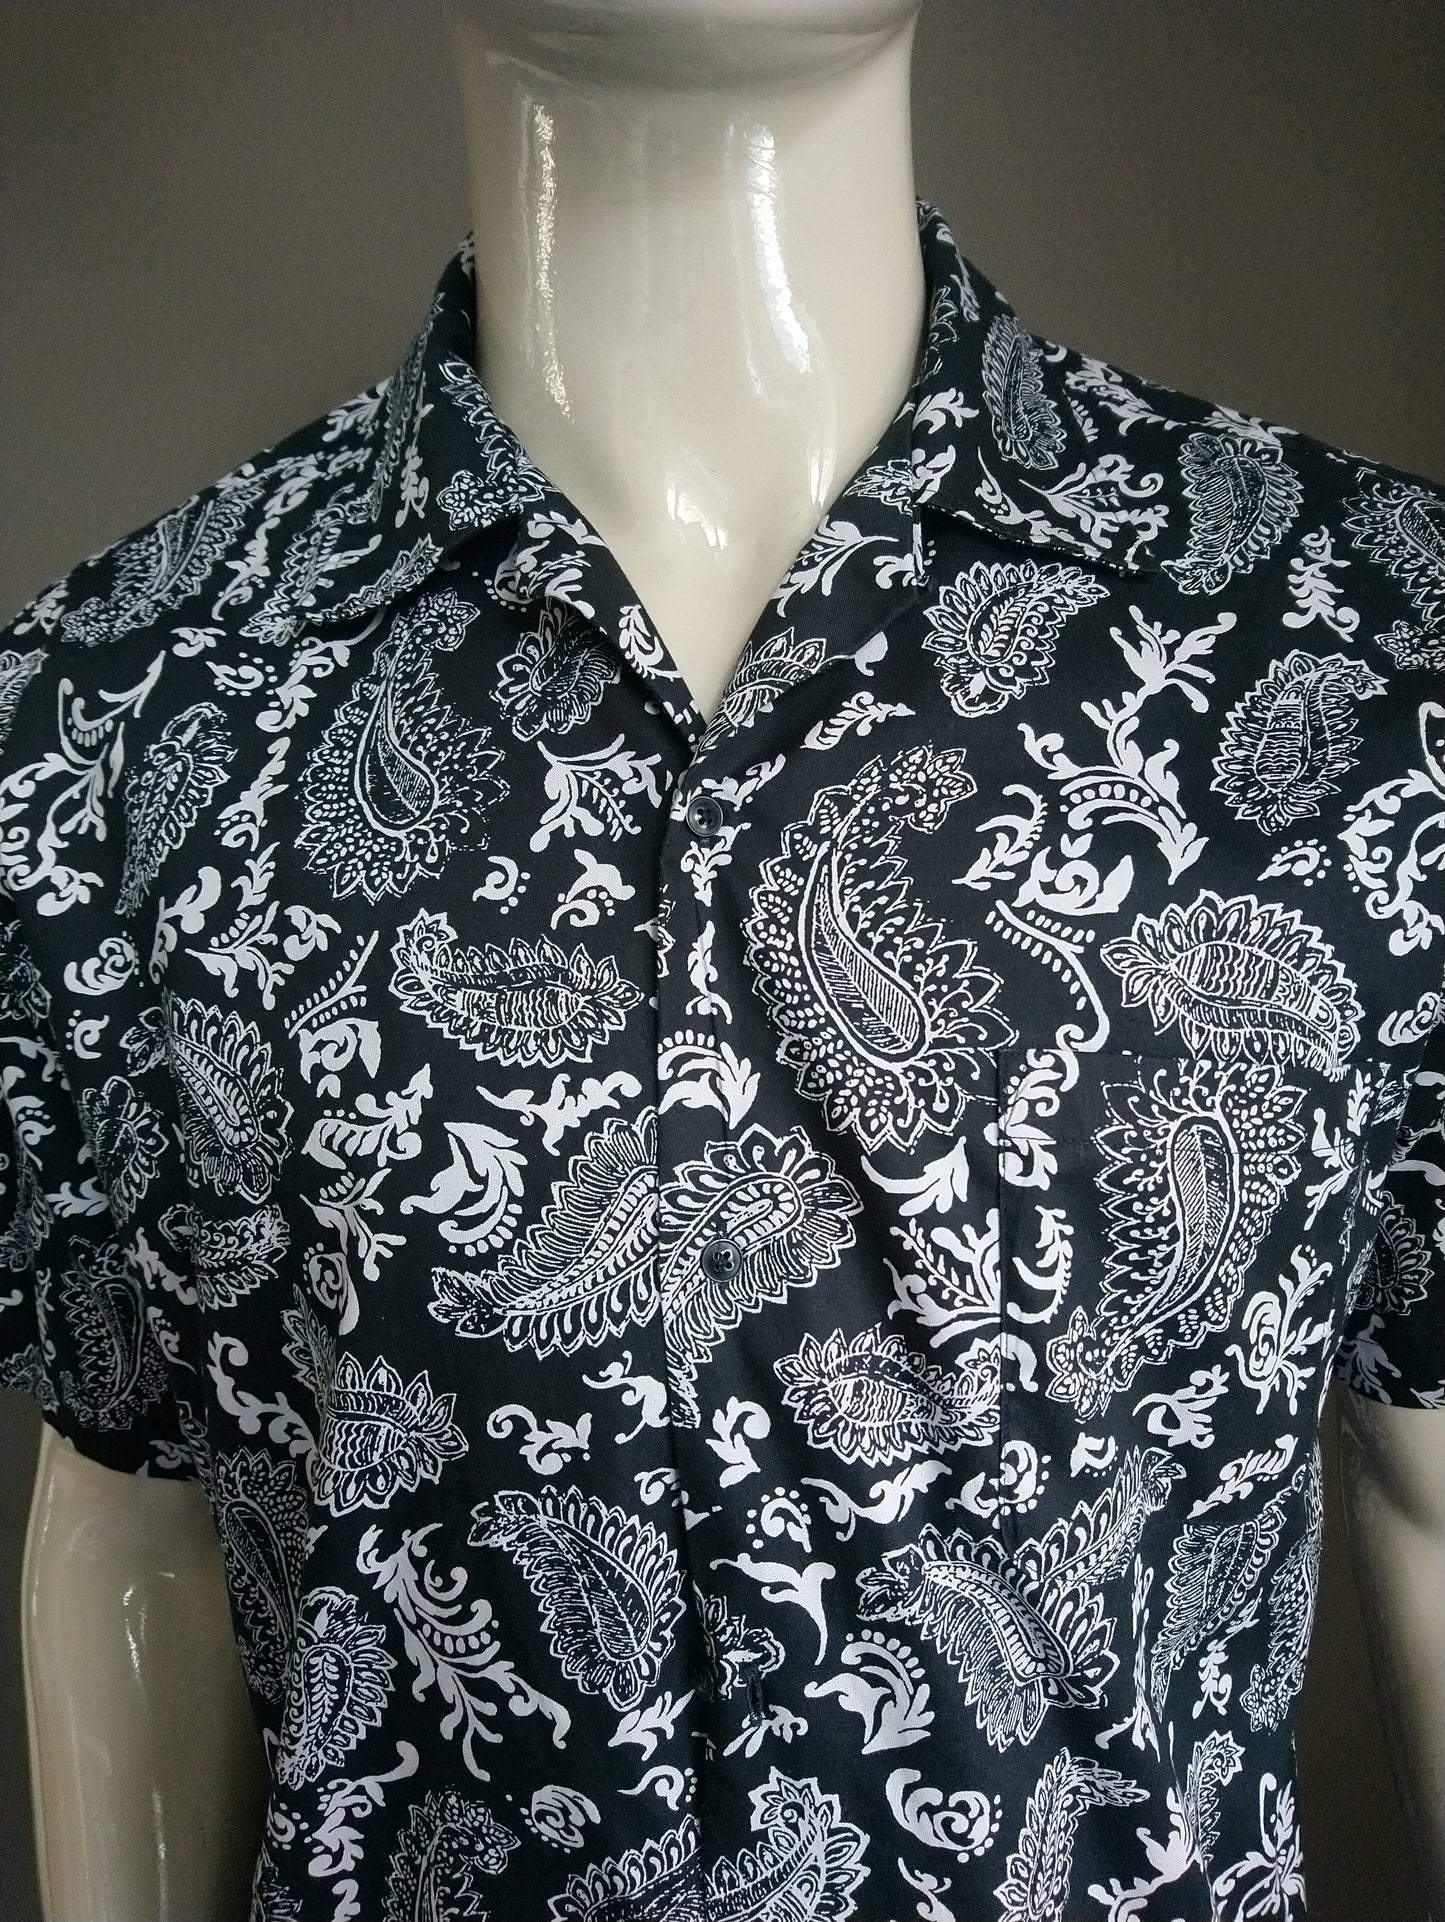 Replay print shirt short sleeve. Black and white paisley print. Size XL.